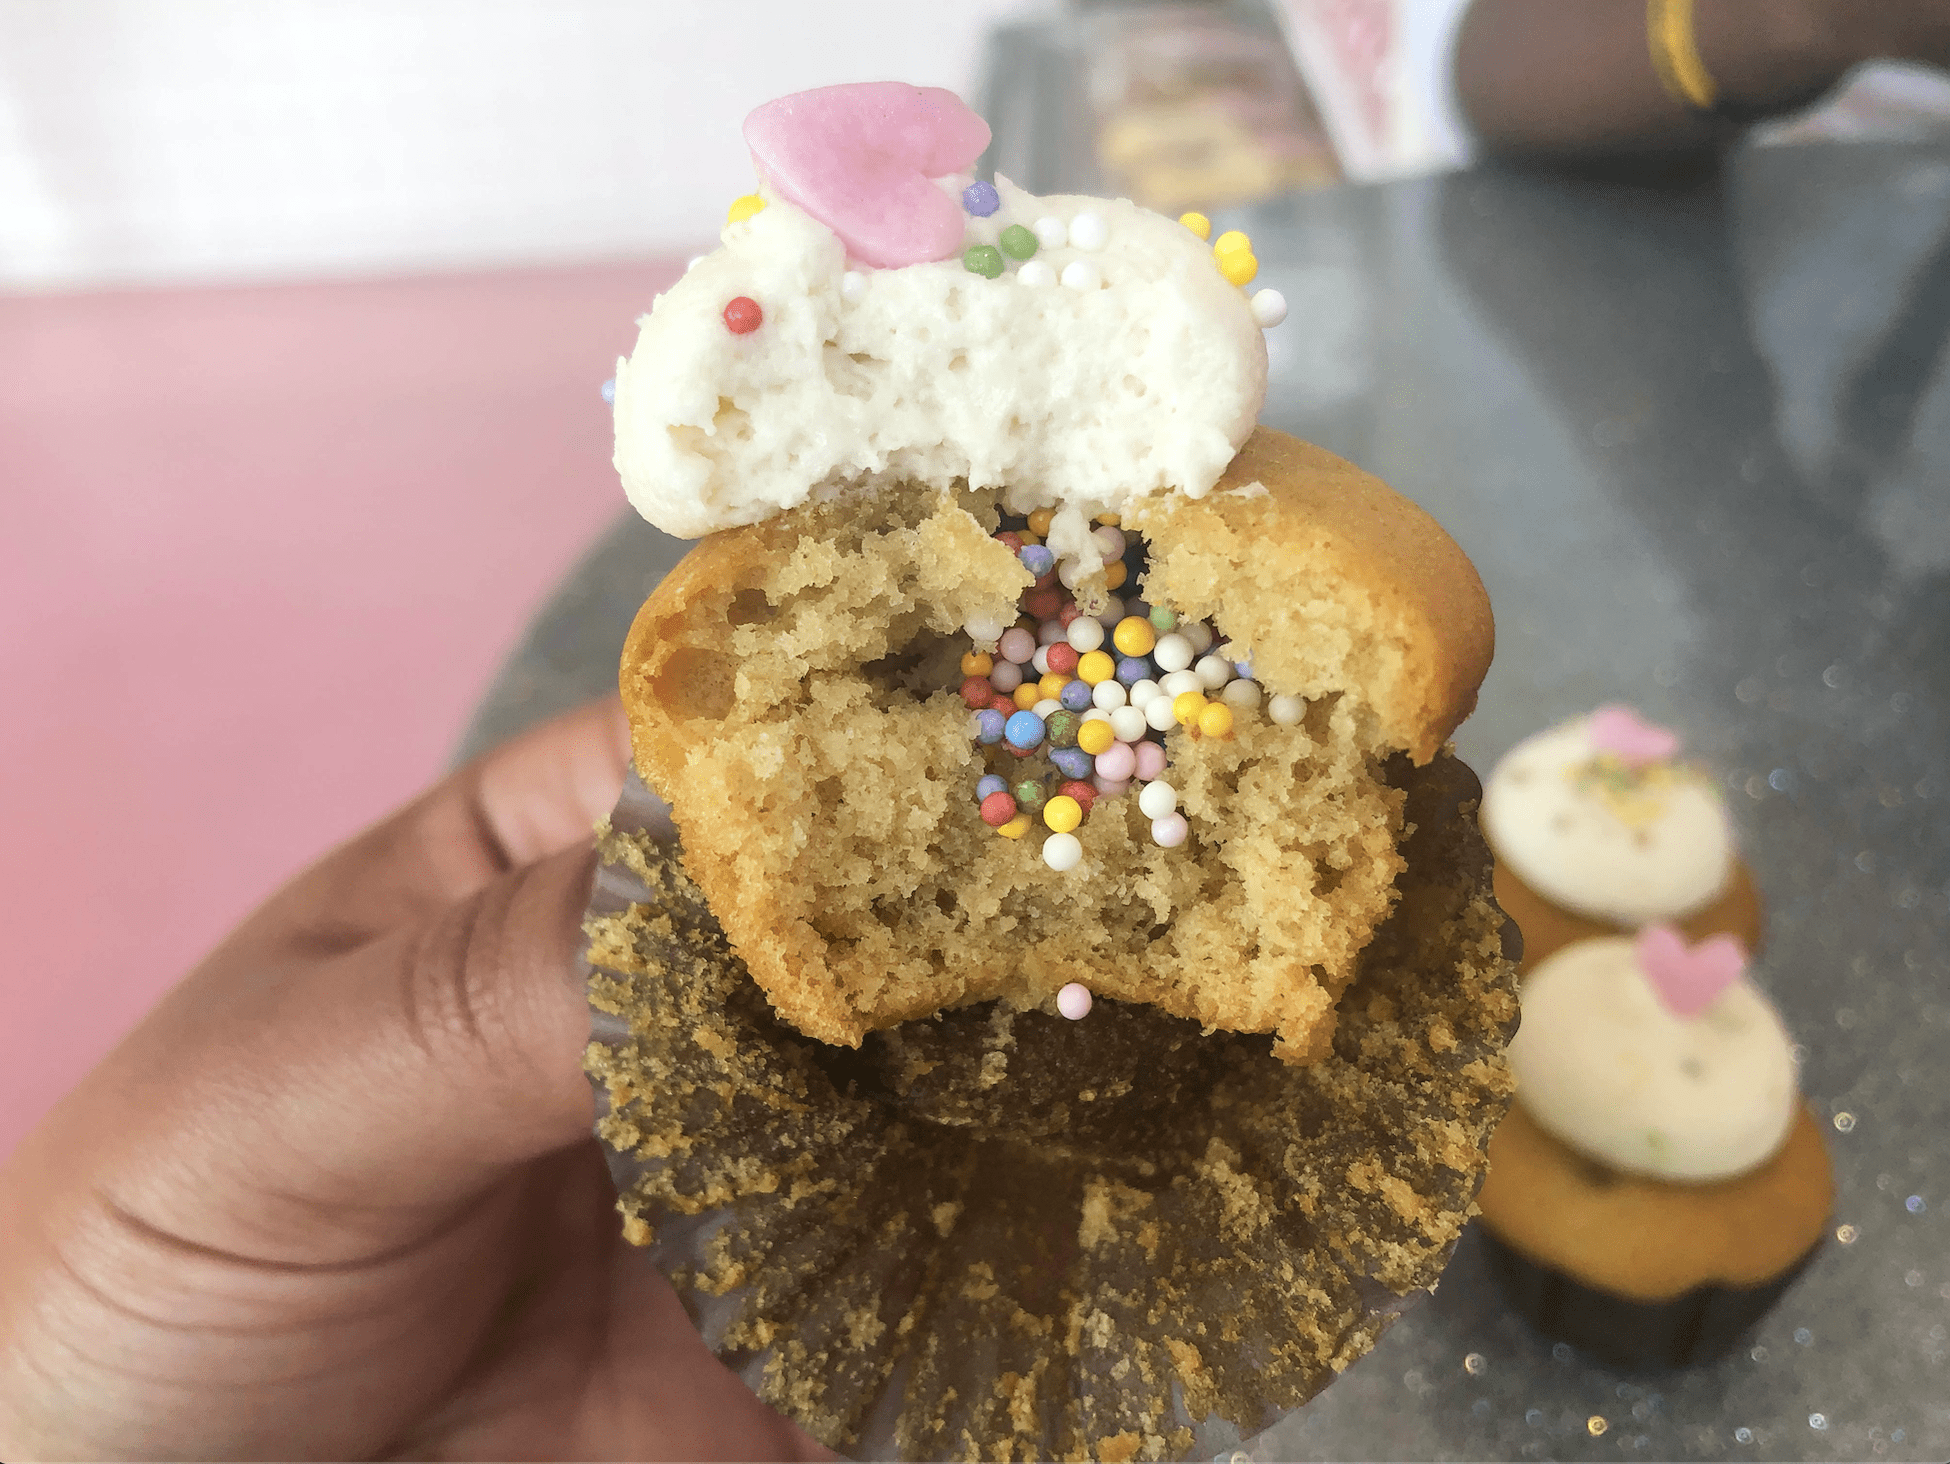 Sprinkle Cupcake